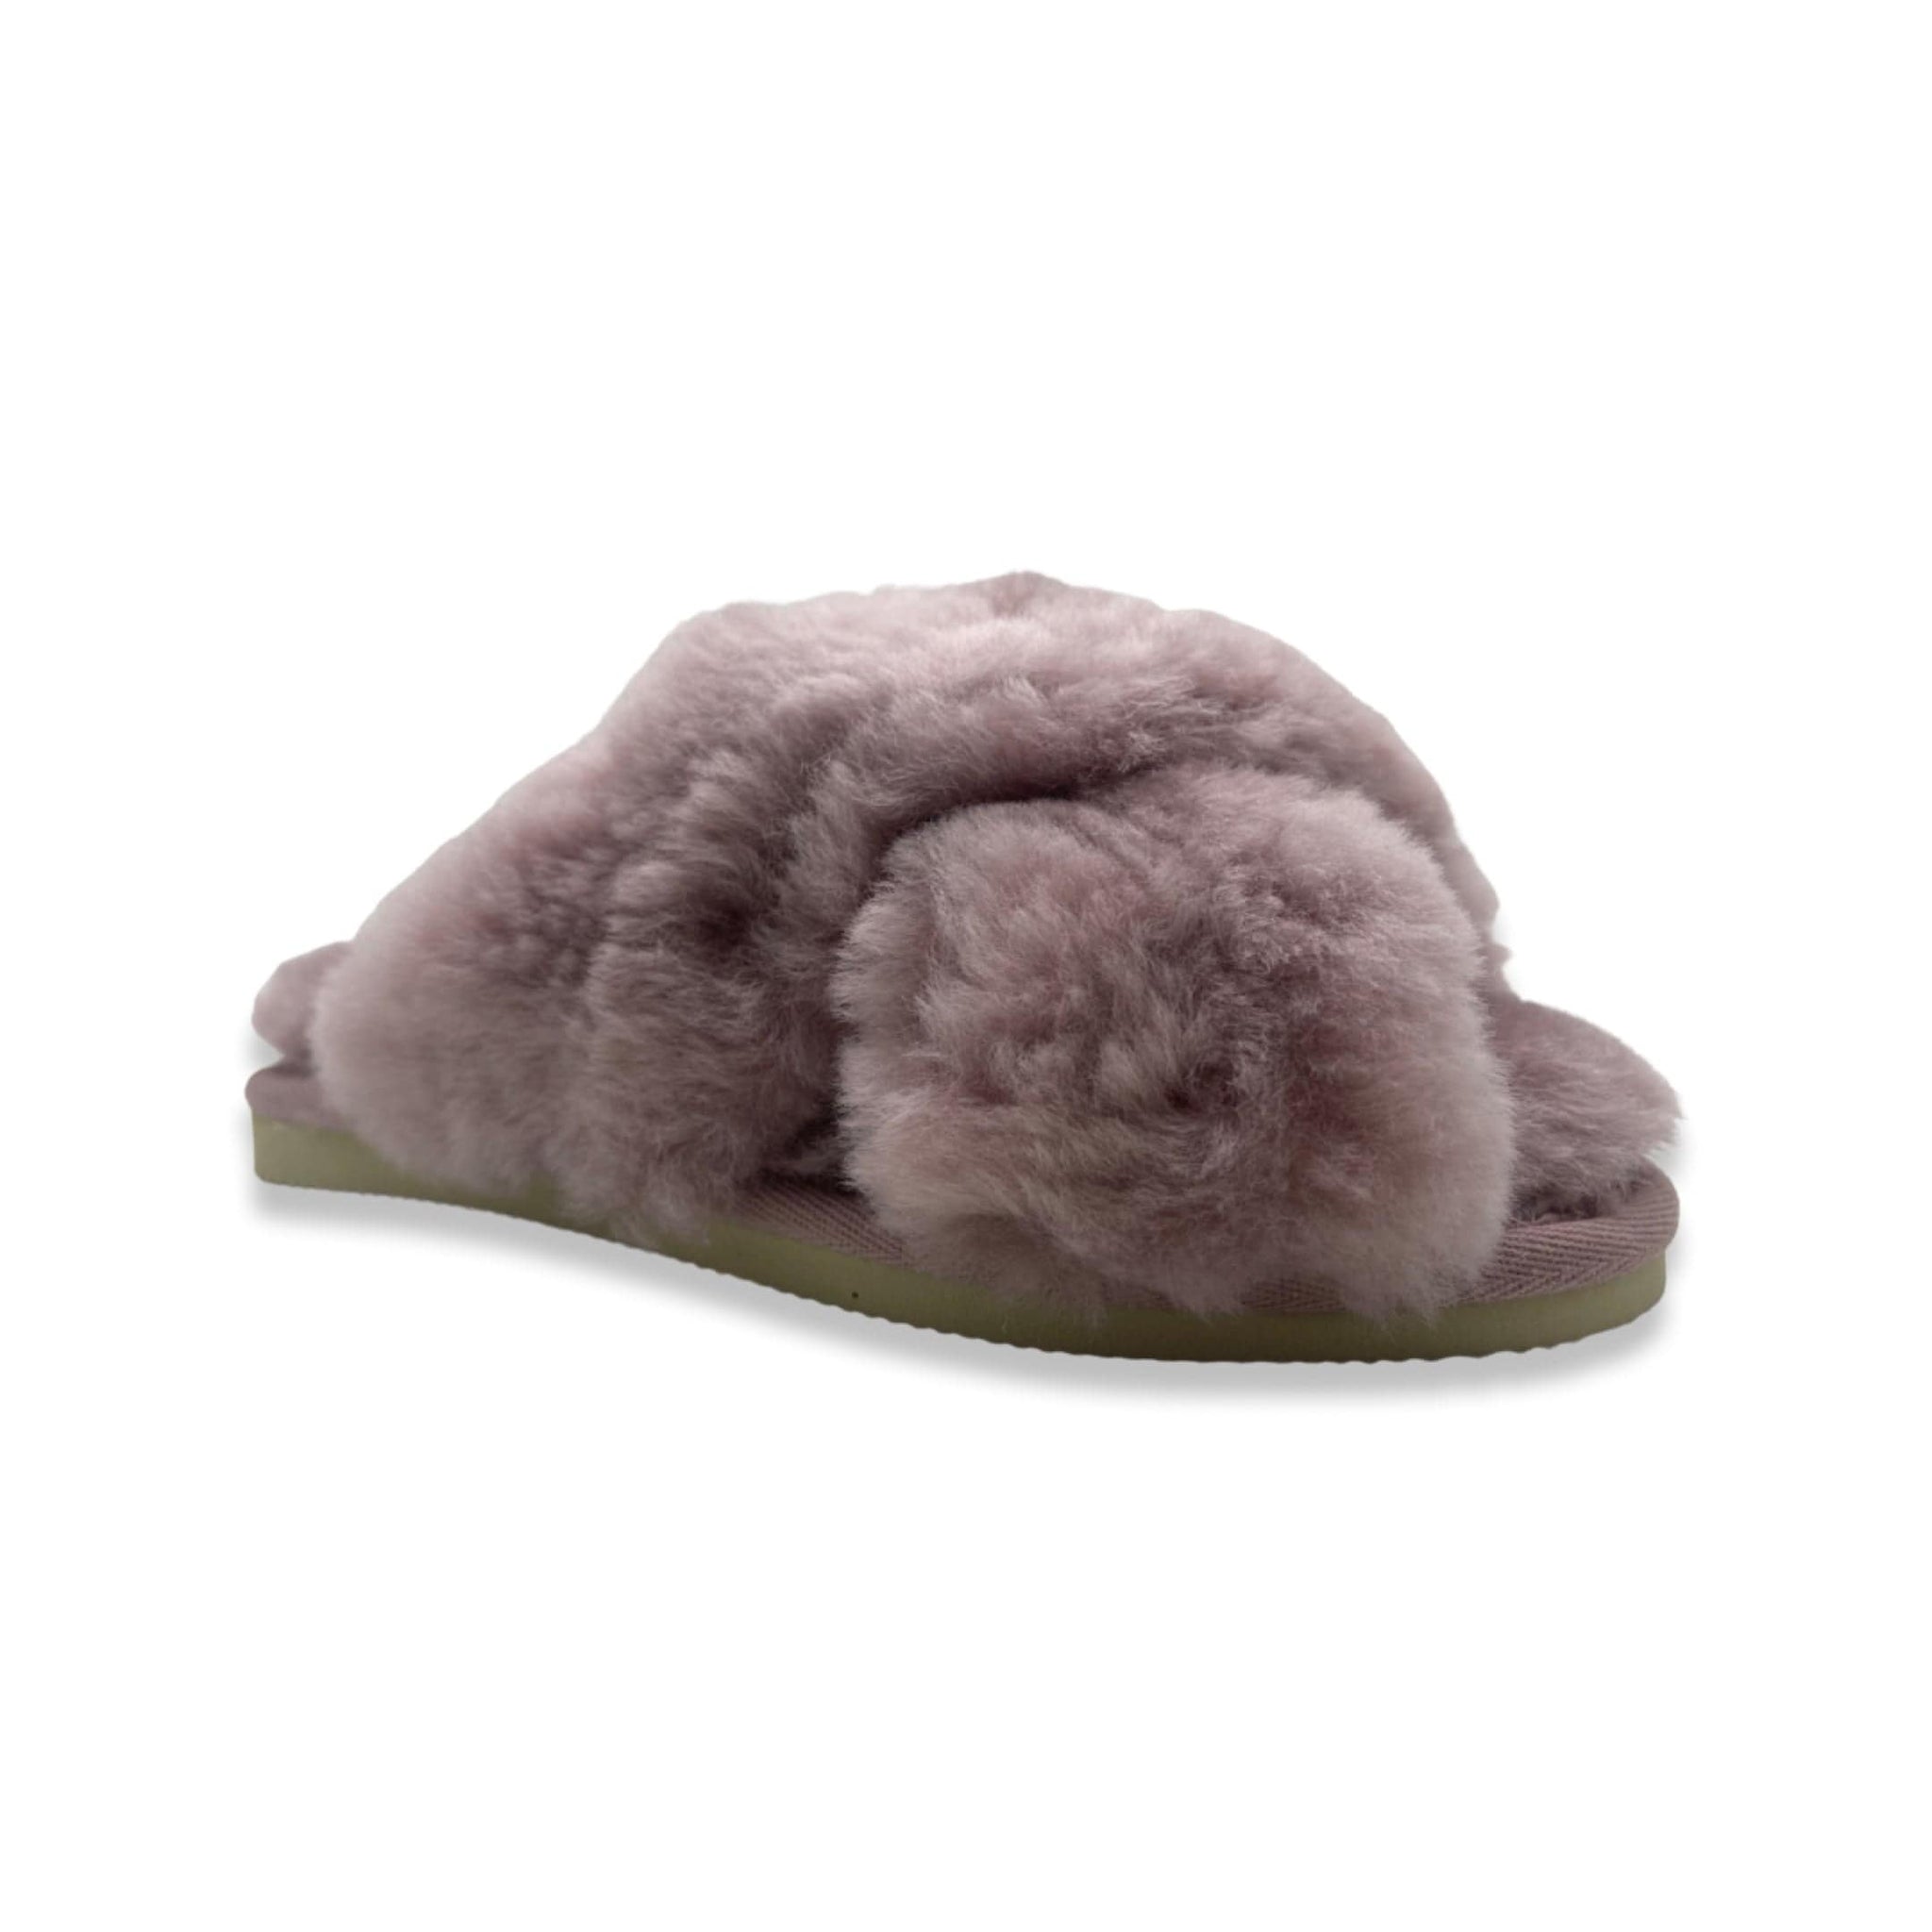 NAT 2 fodtøj thies 1856 ® Sheep Cross Sandal ny pink (W) bæredygtig mode etisk mode